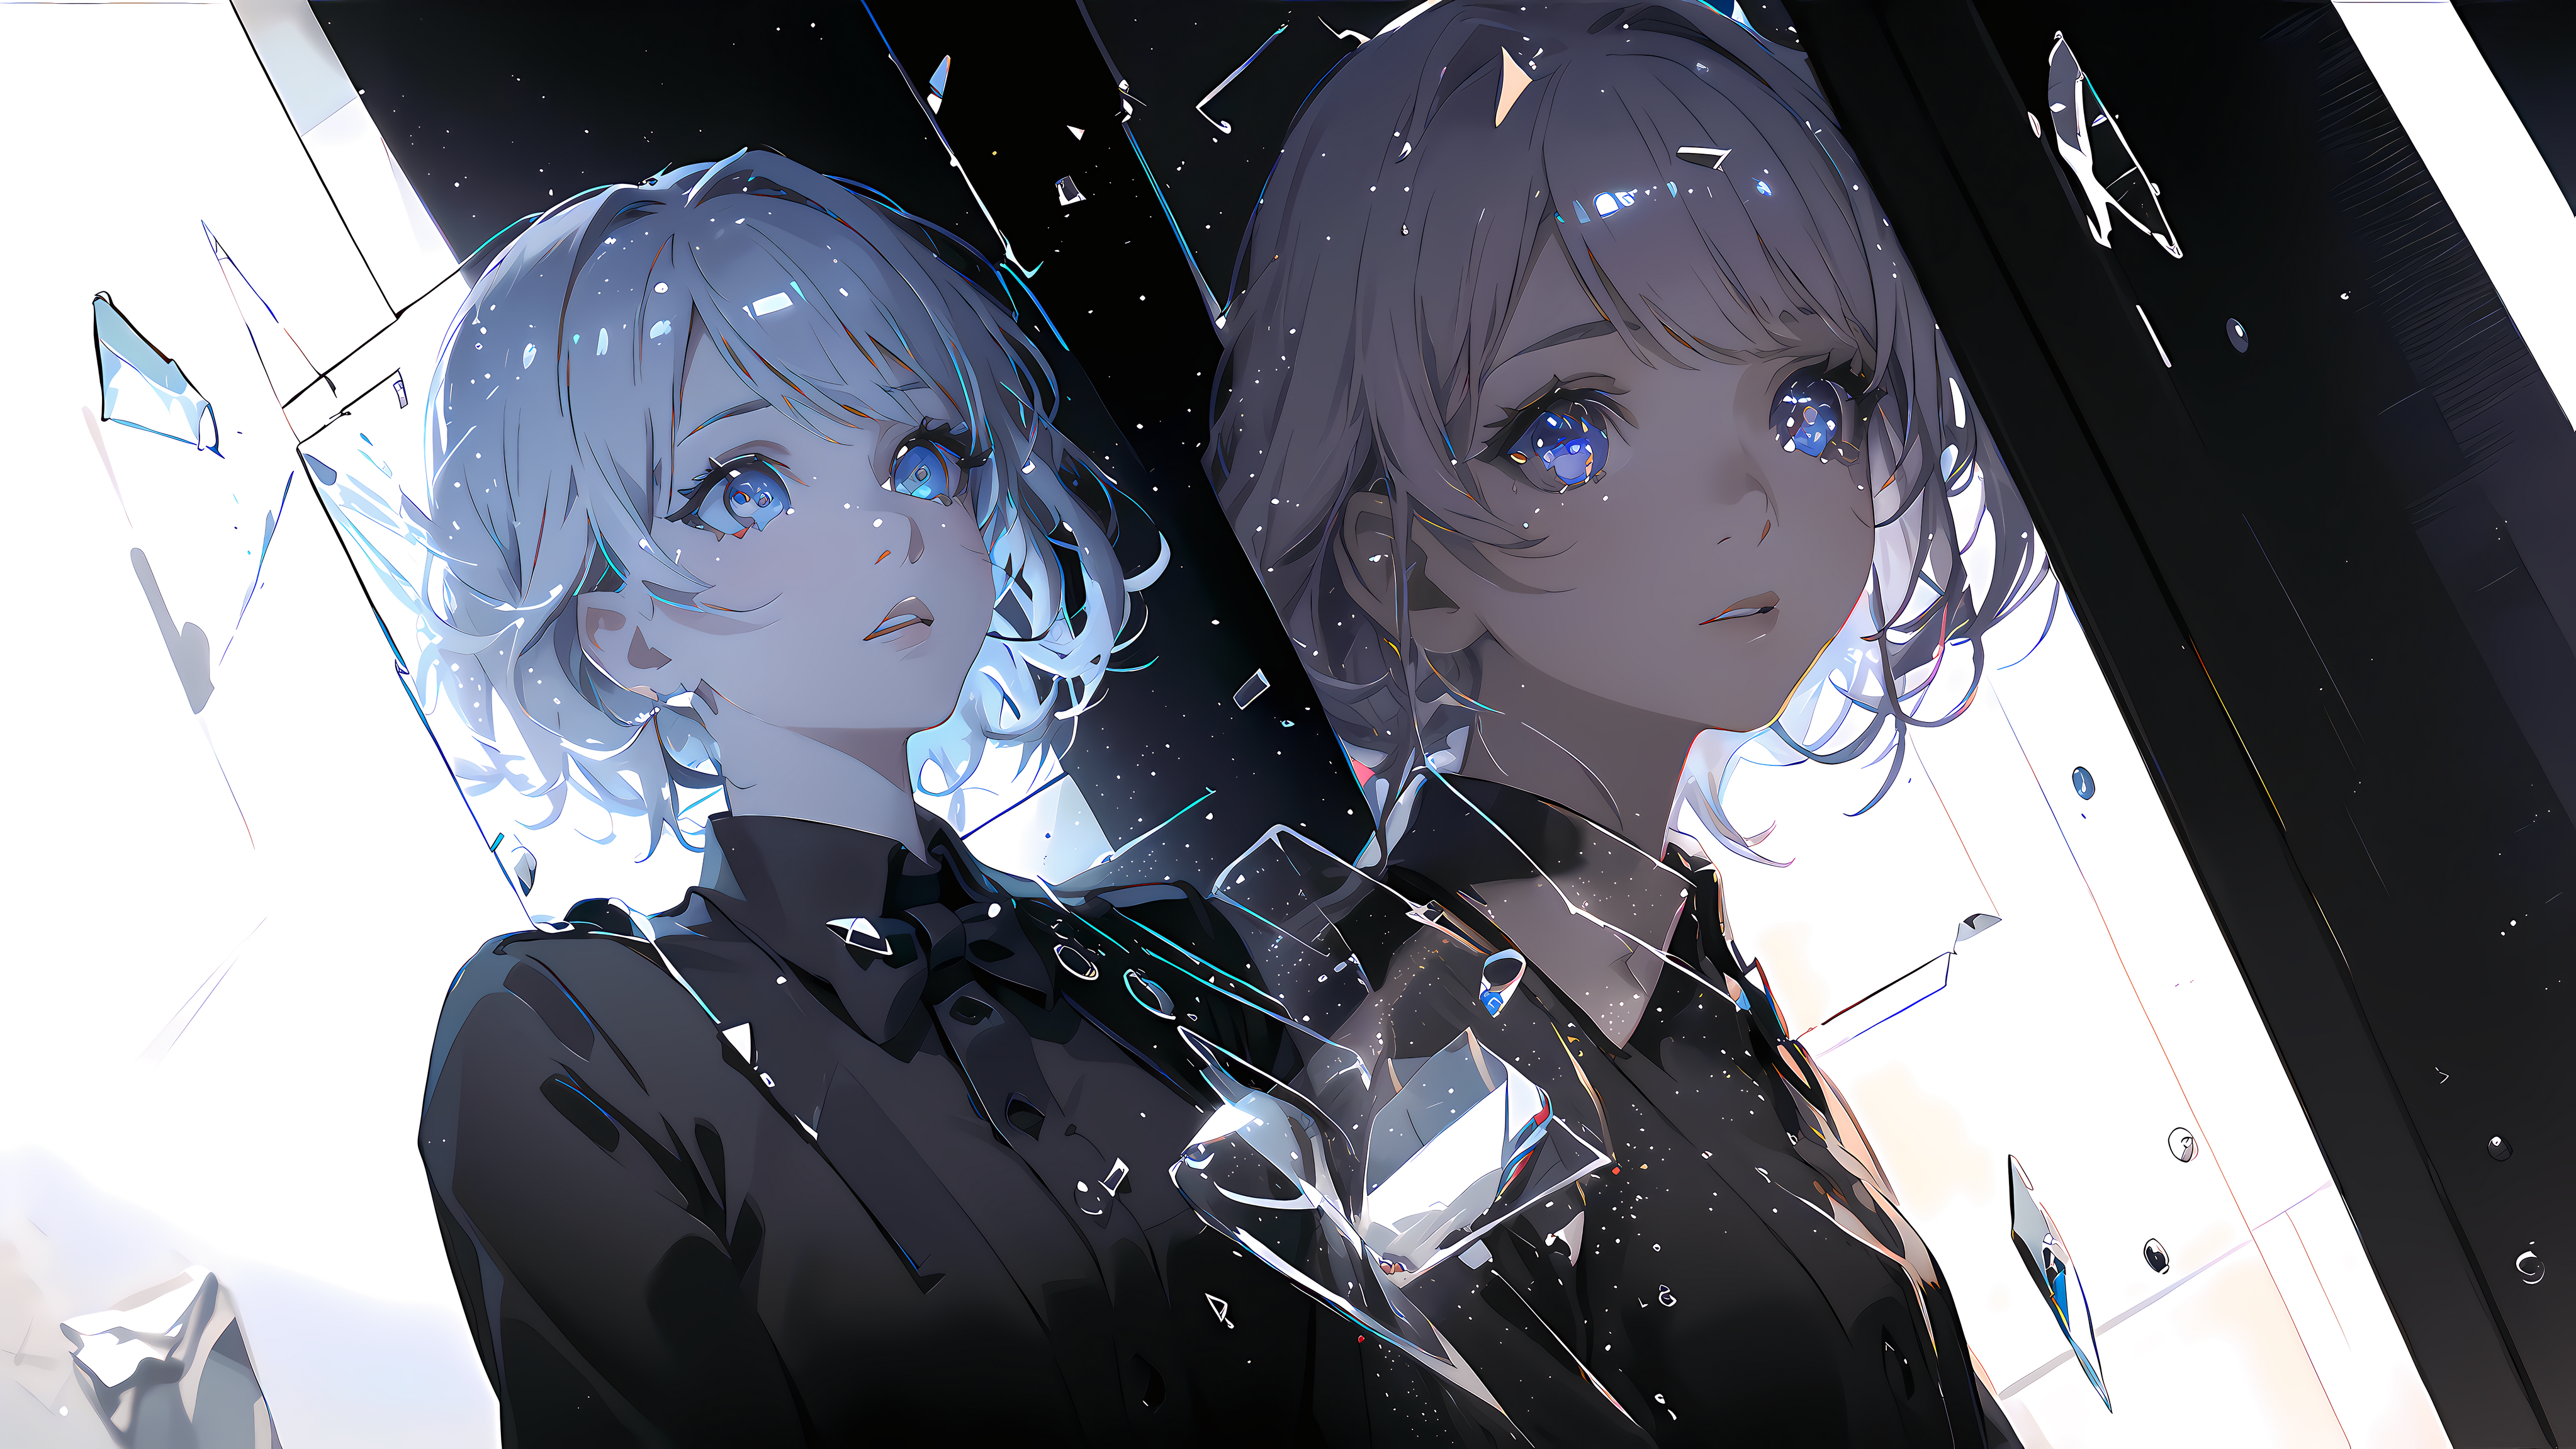 Anime 4093x2302 AI art anime girls white hair prism looking at viewer black mirror broken glass short hair bow tie